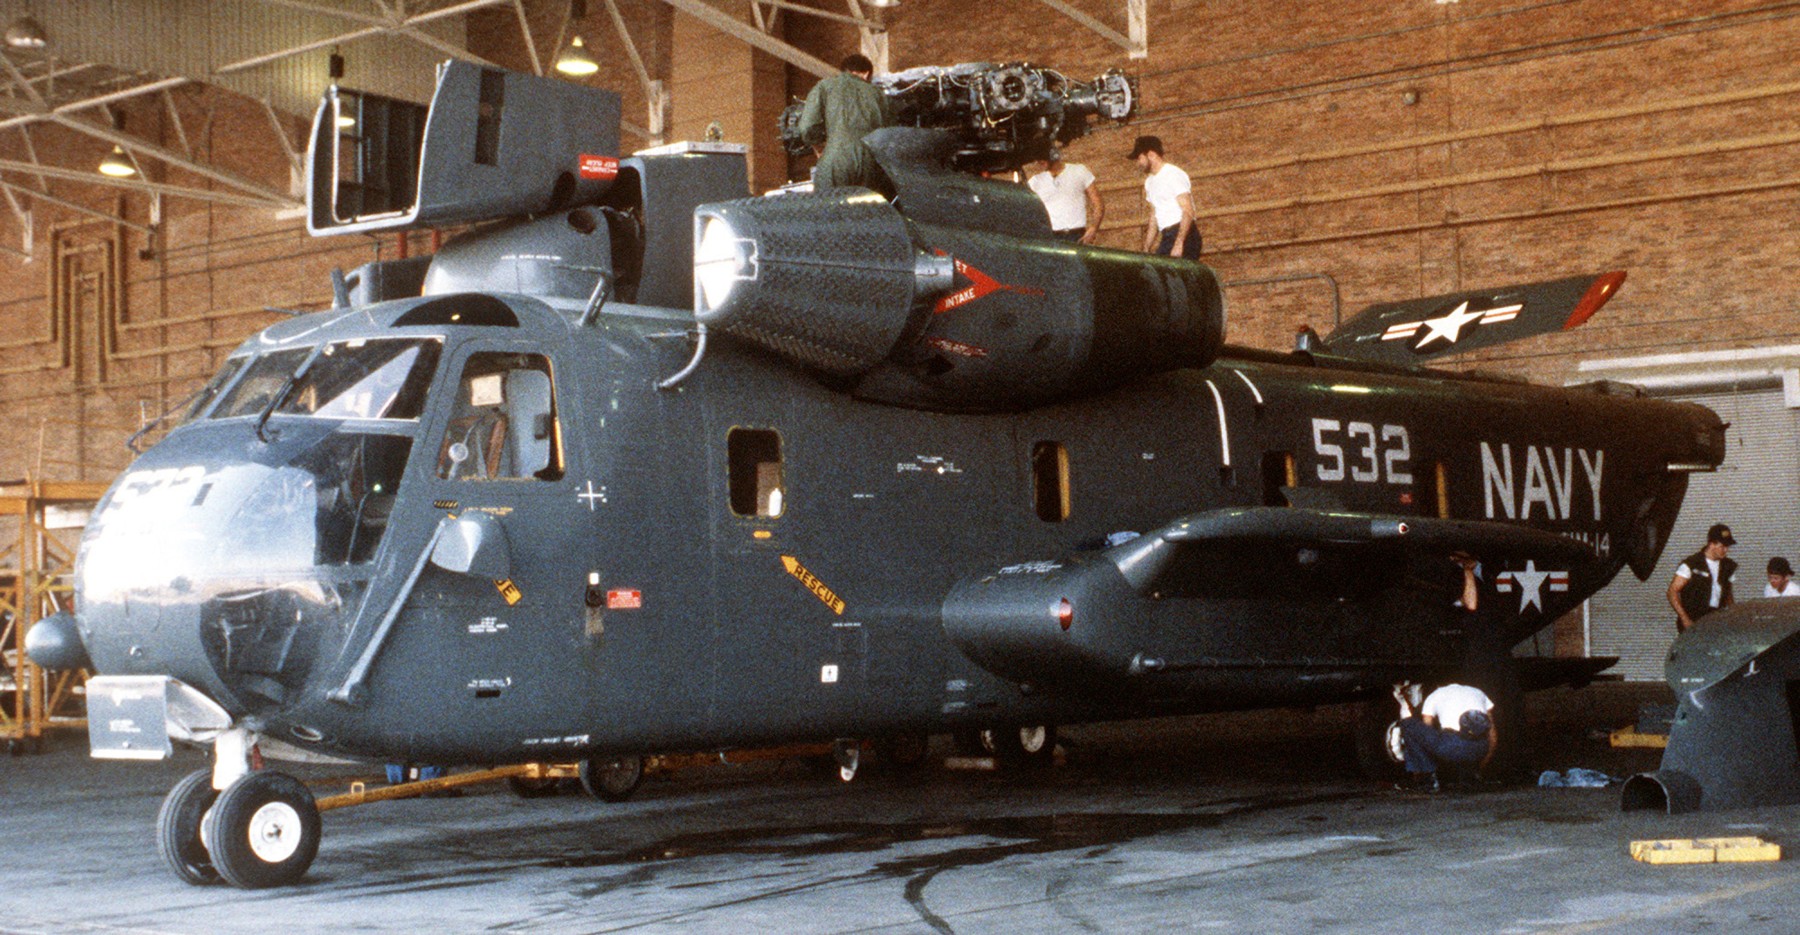 hm-14 vanguard helicopter mine countermeasures squadron navy rh-53d sea stallion 71